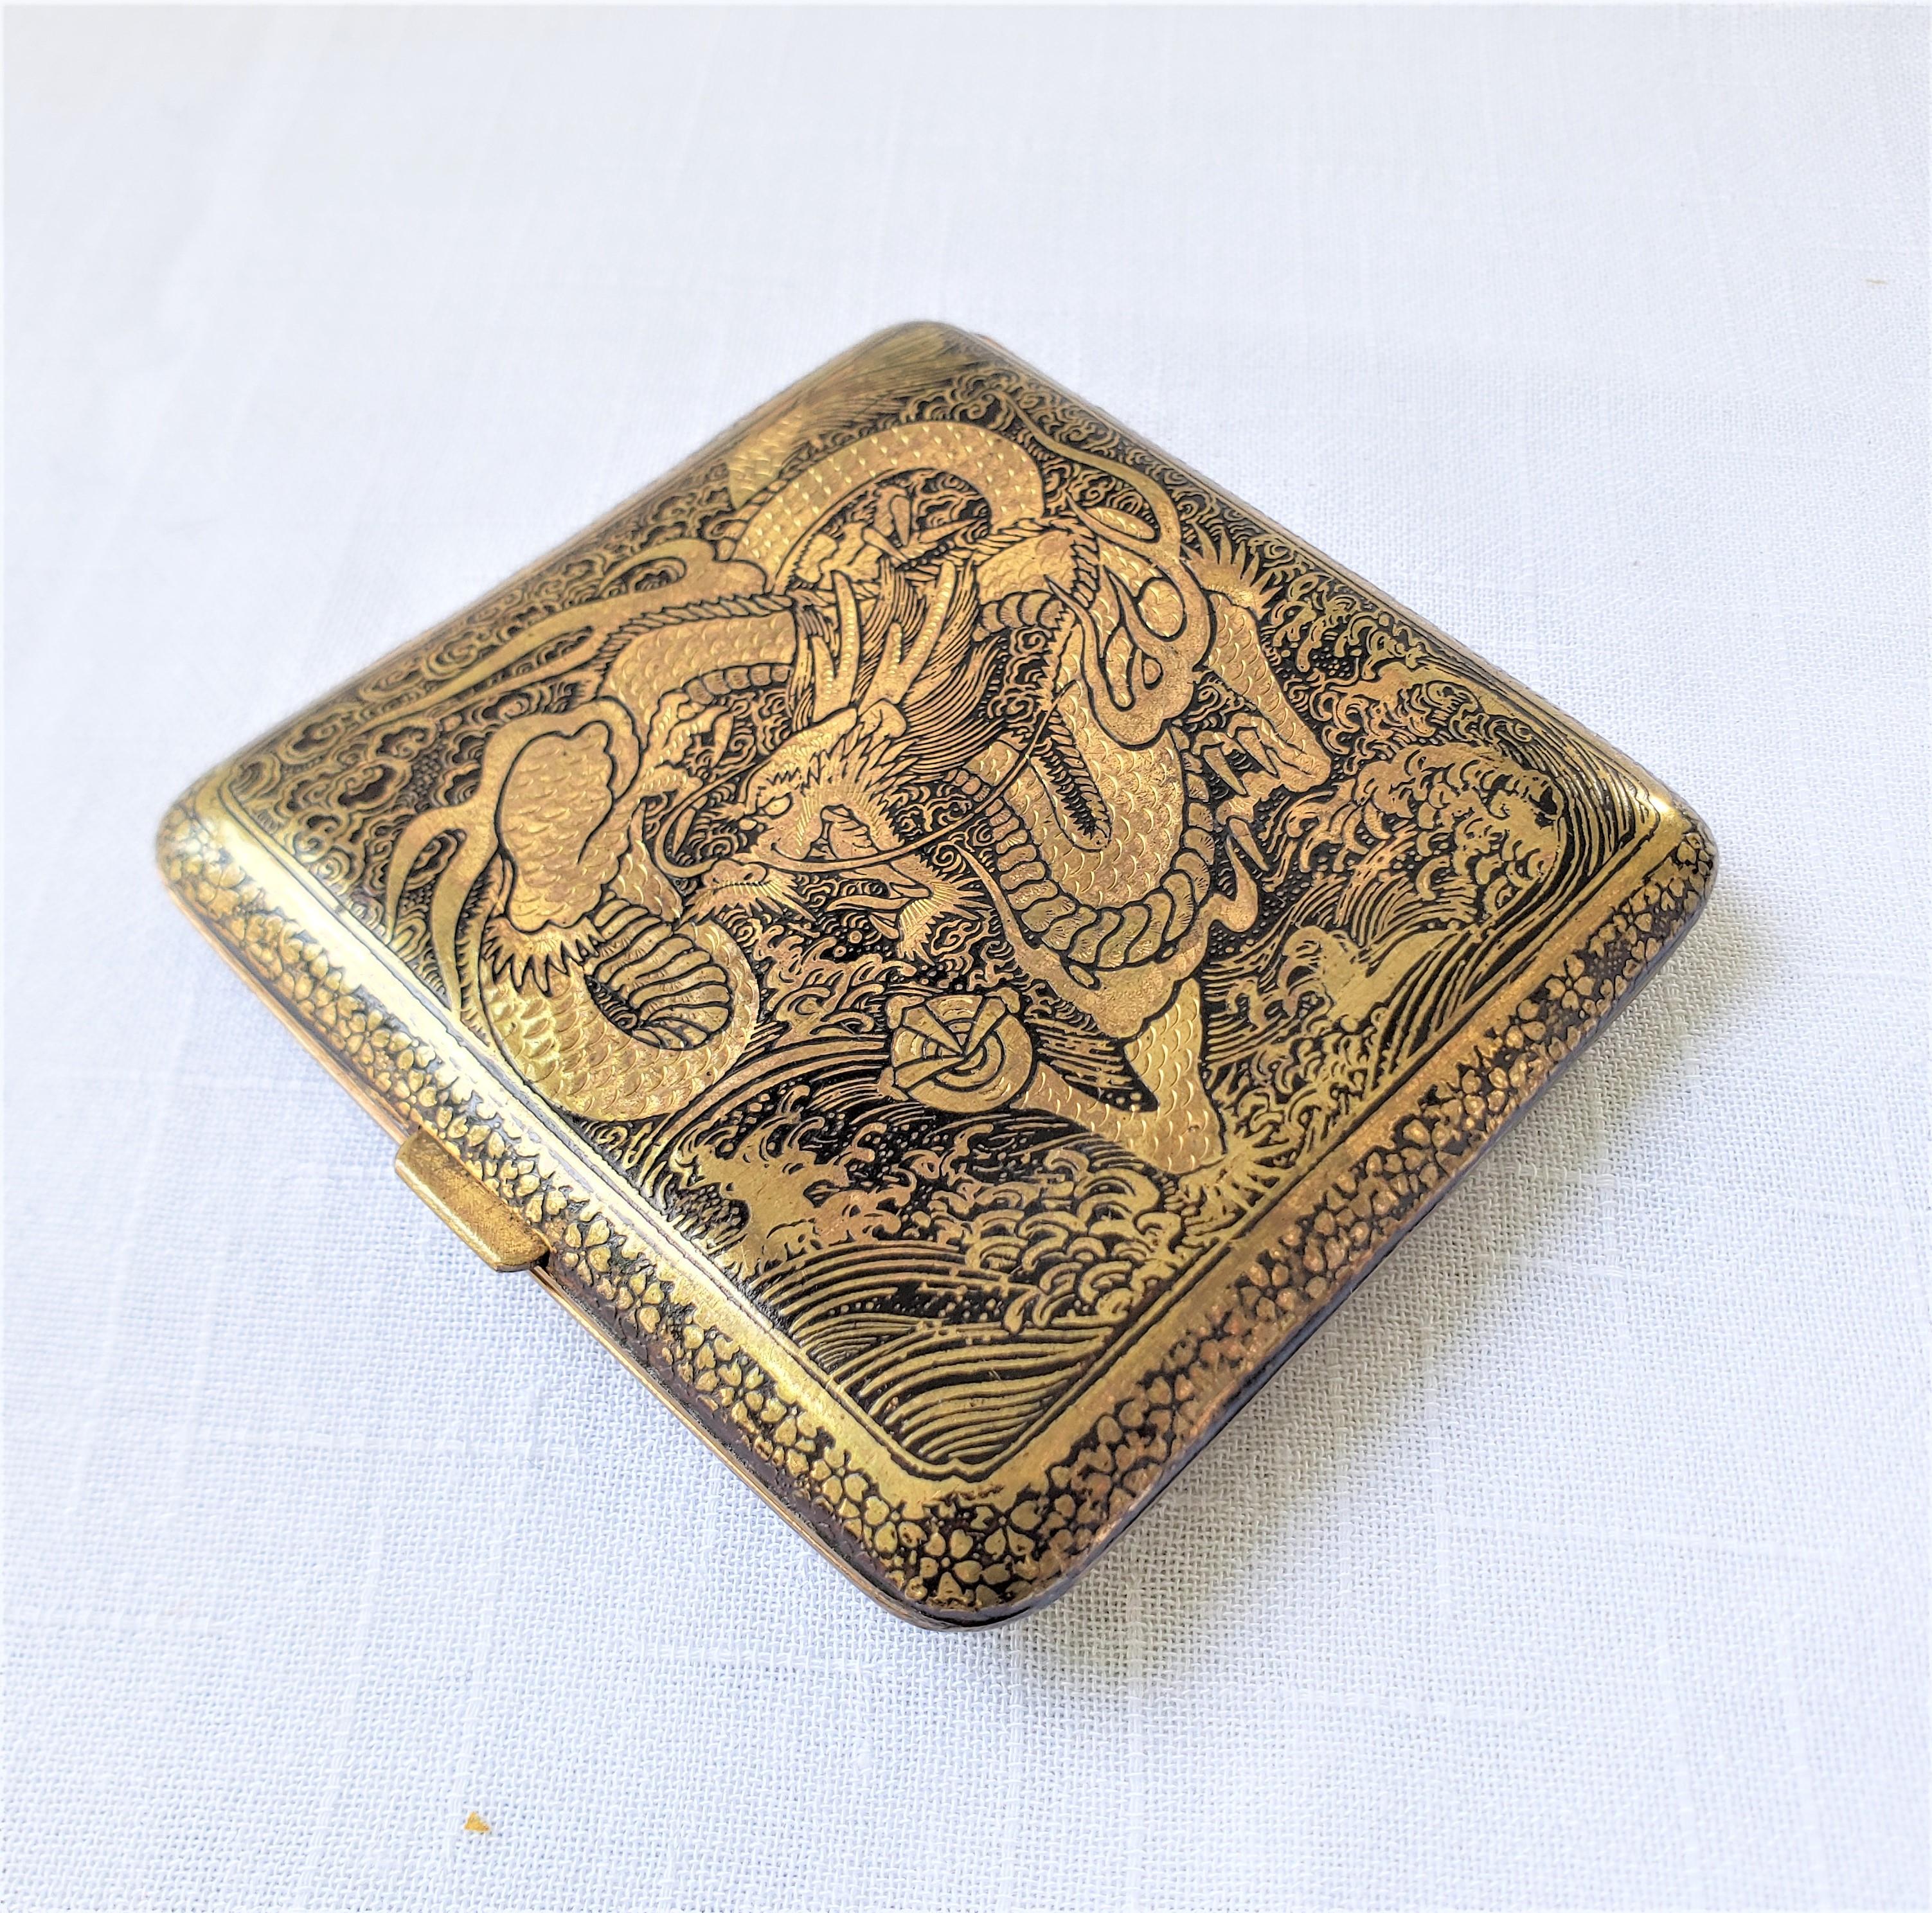 Antique Japanese Damascene Cigarette Case with Ornate Mt. Fuji & Dragon Decor For Sale 3